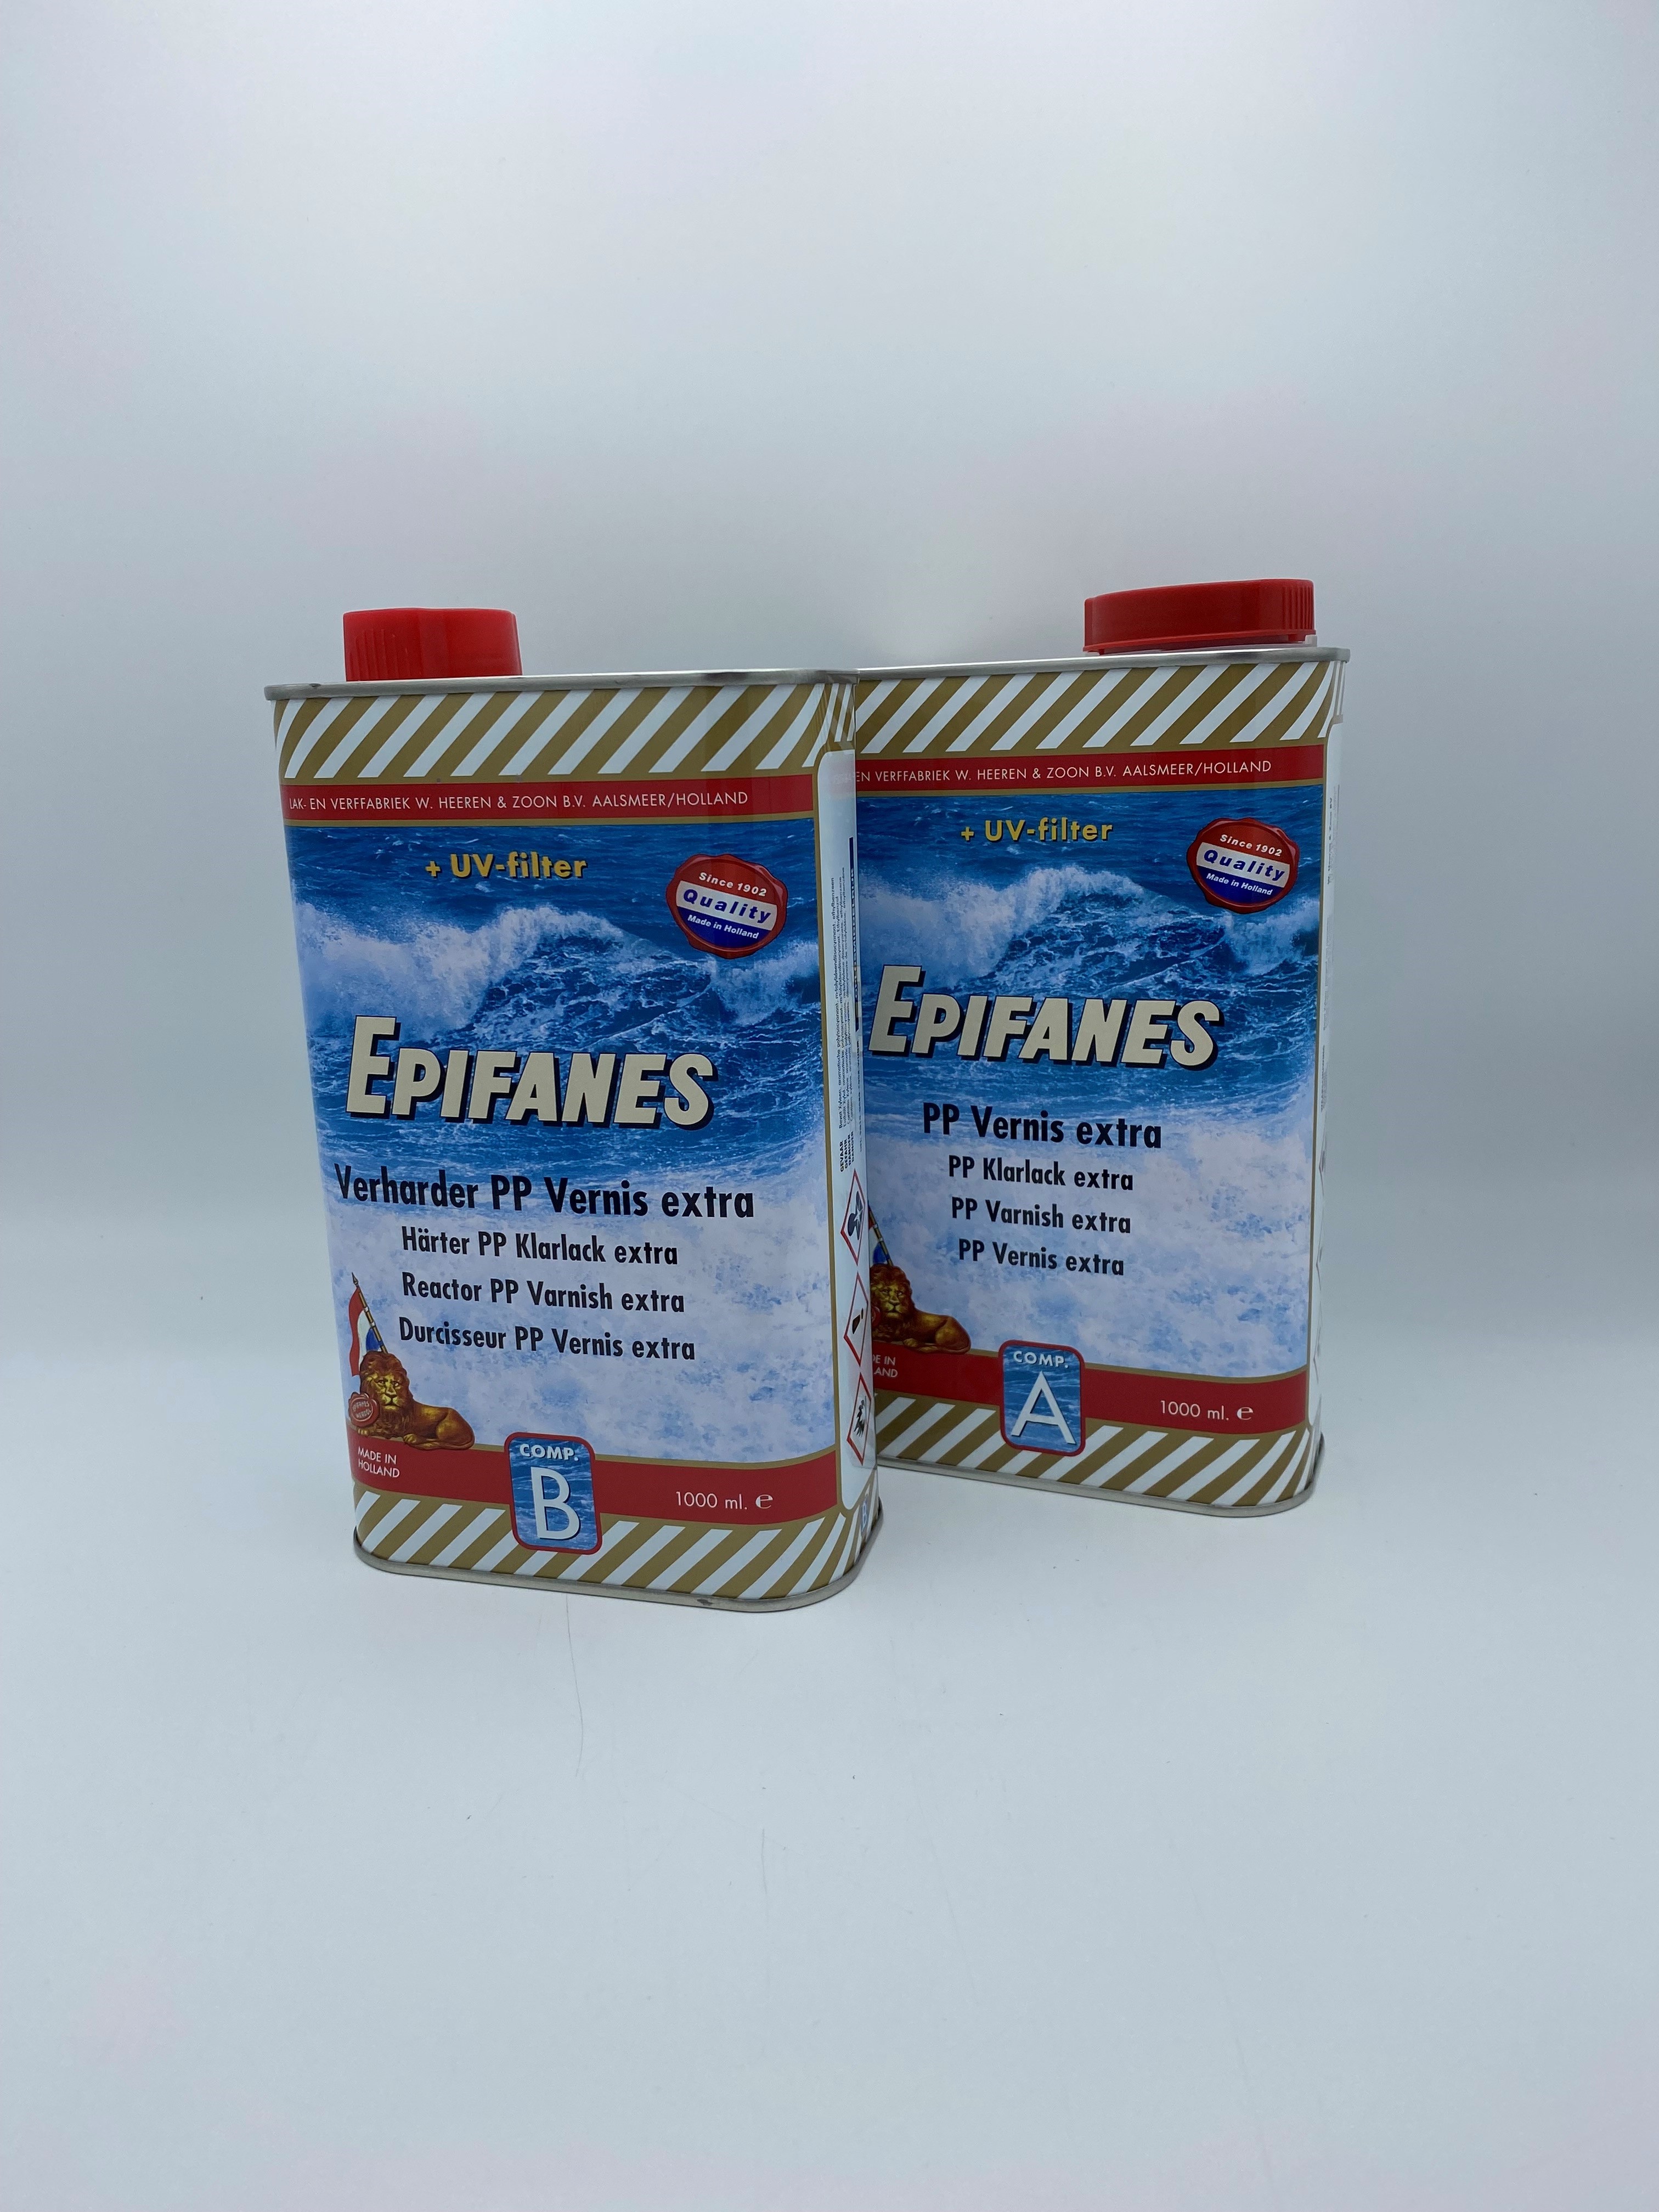 EPIFANES Clear High-Gloss Varnish